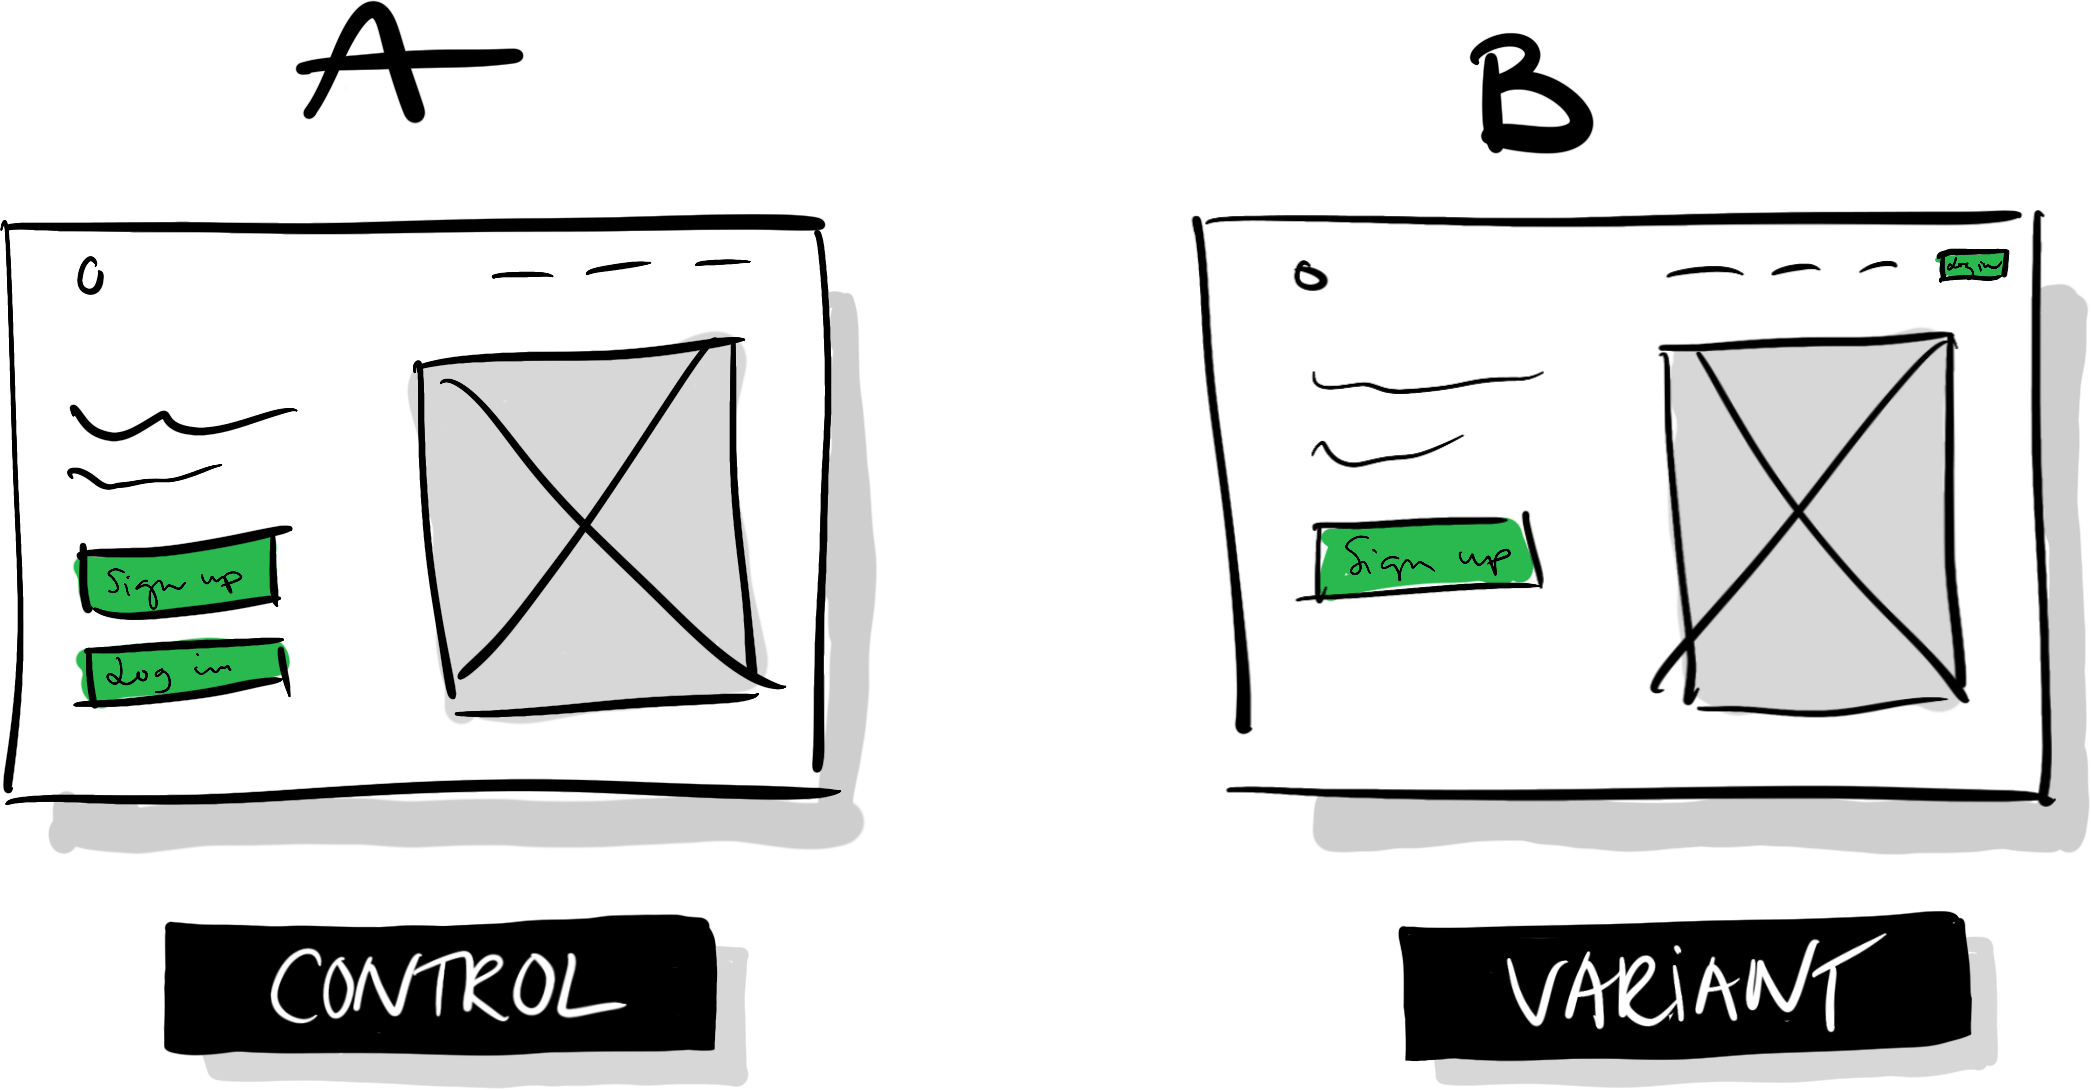 A/B test variants